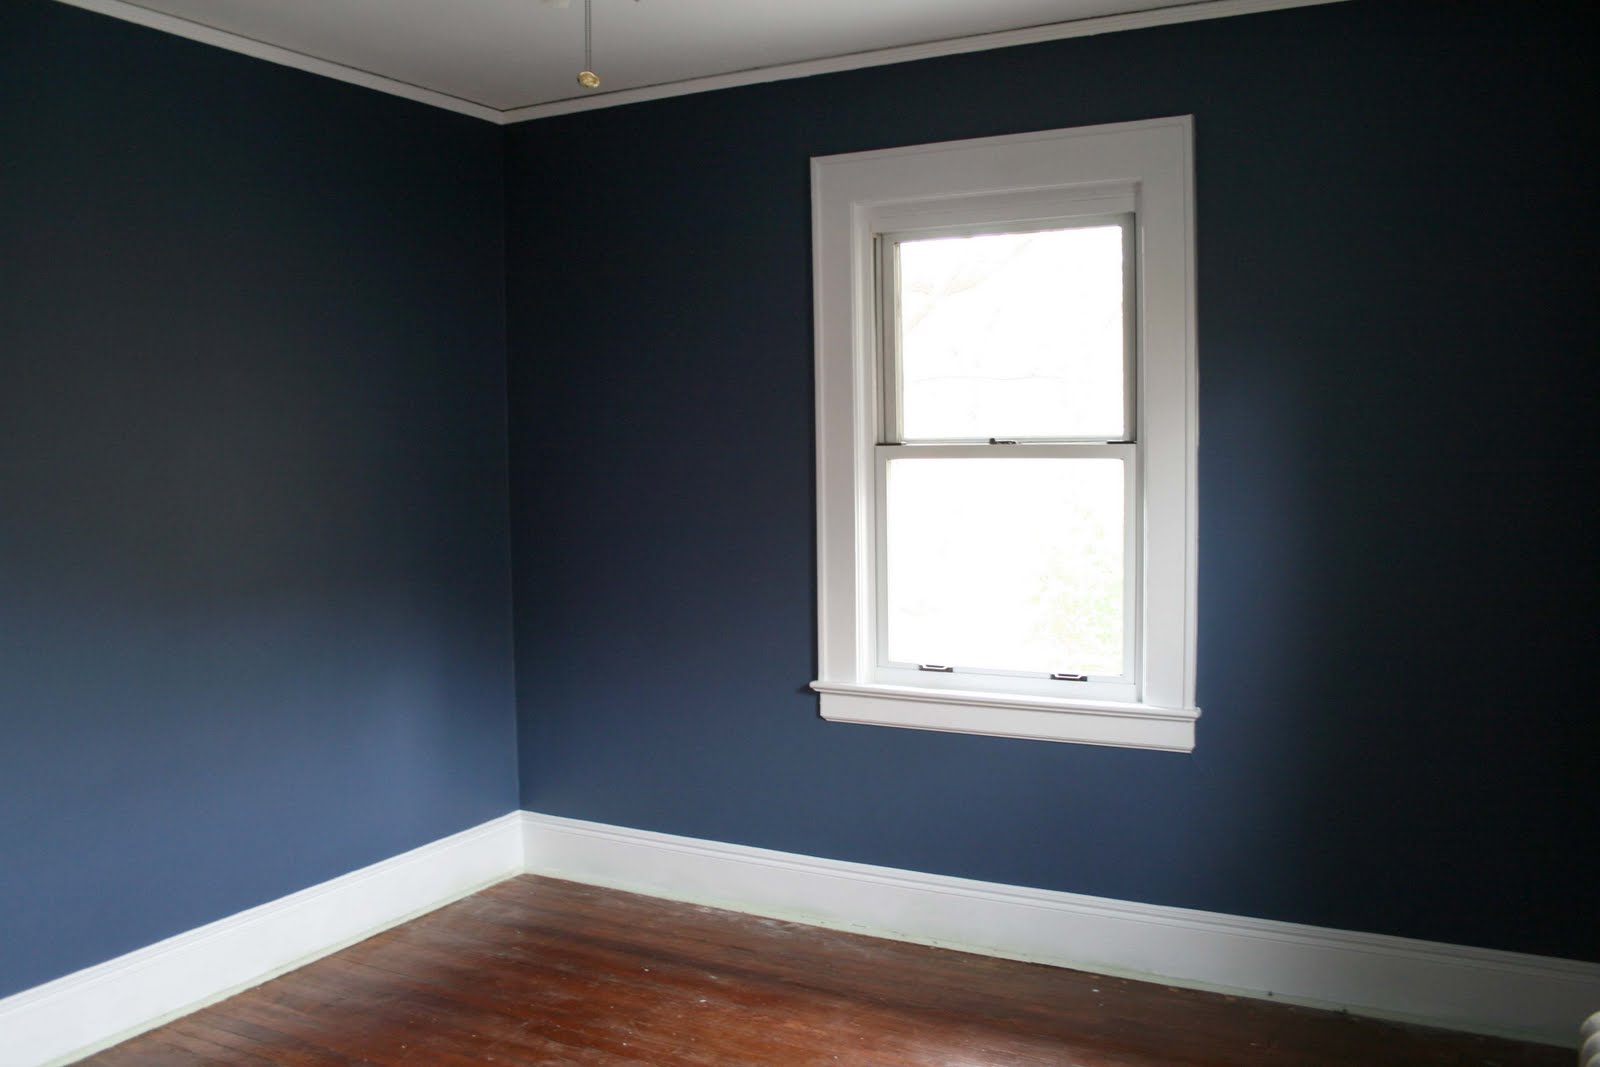 Interior with paint color Benjamin Moore Kensington Blue CC-780